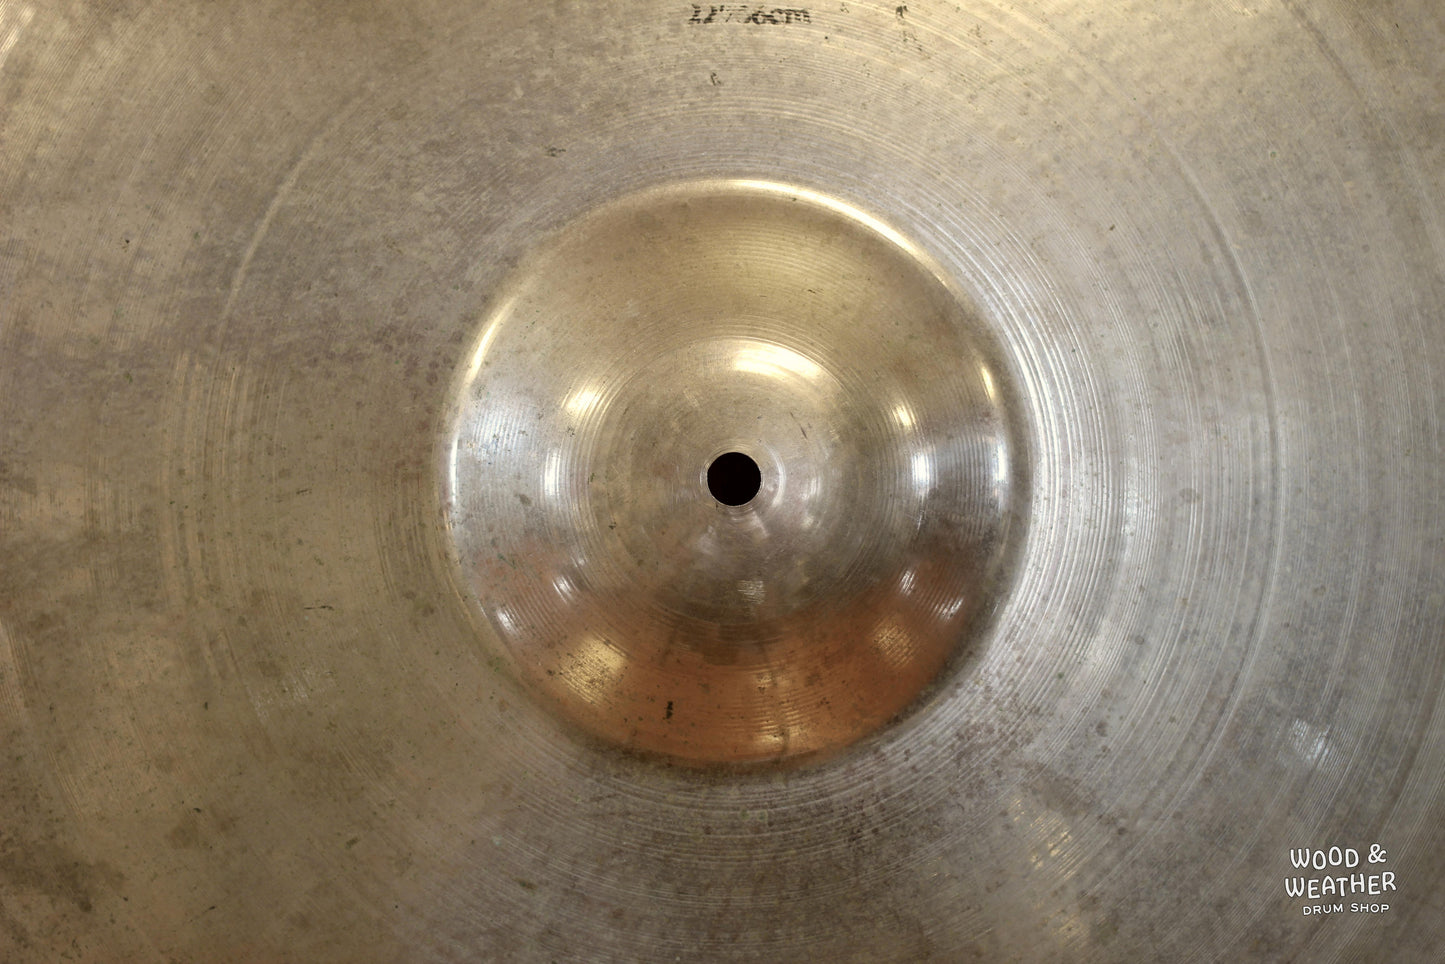 Used Zildjian 22" A Custom Ping Ride Cymbal 3400g